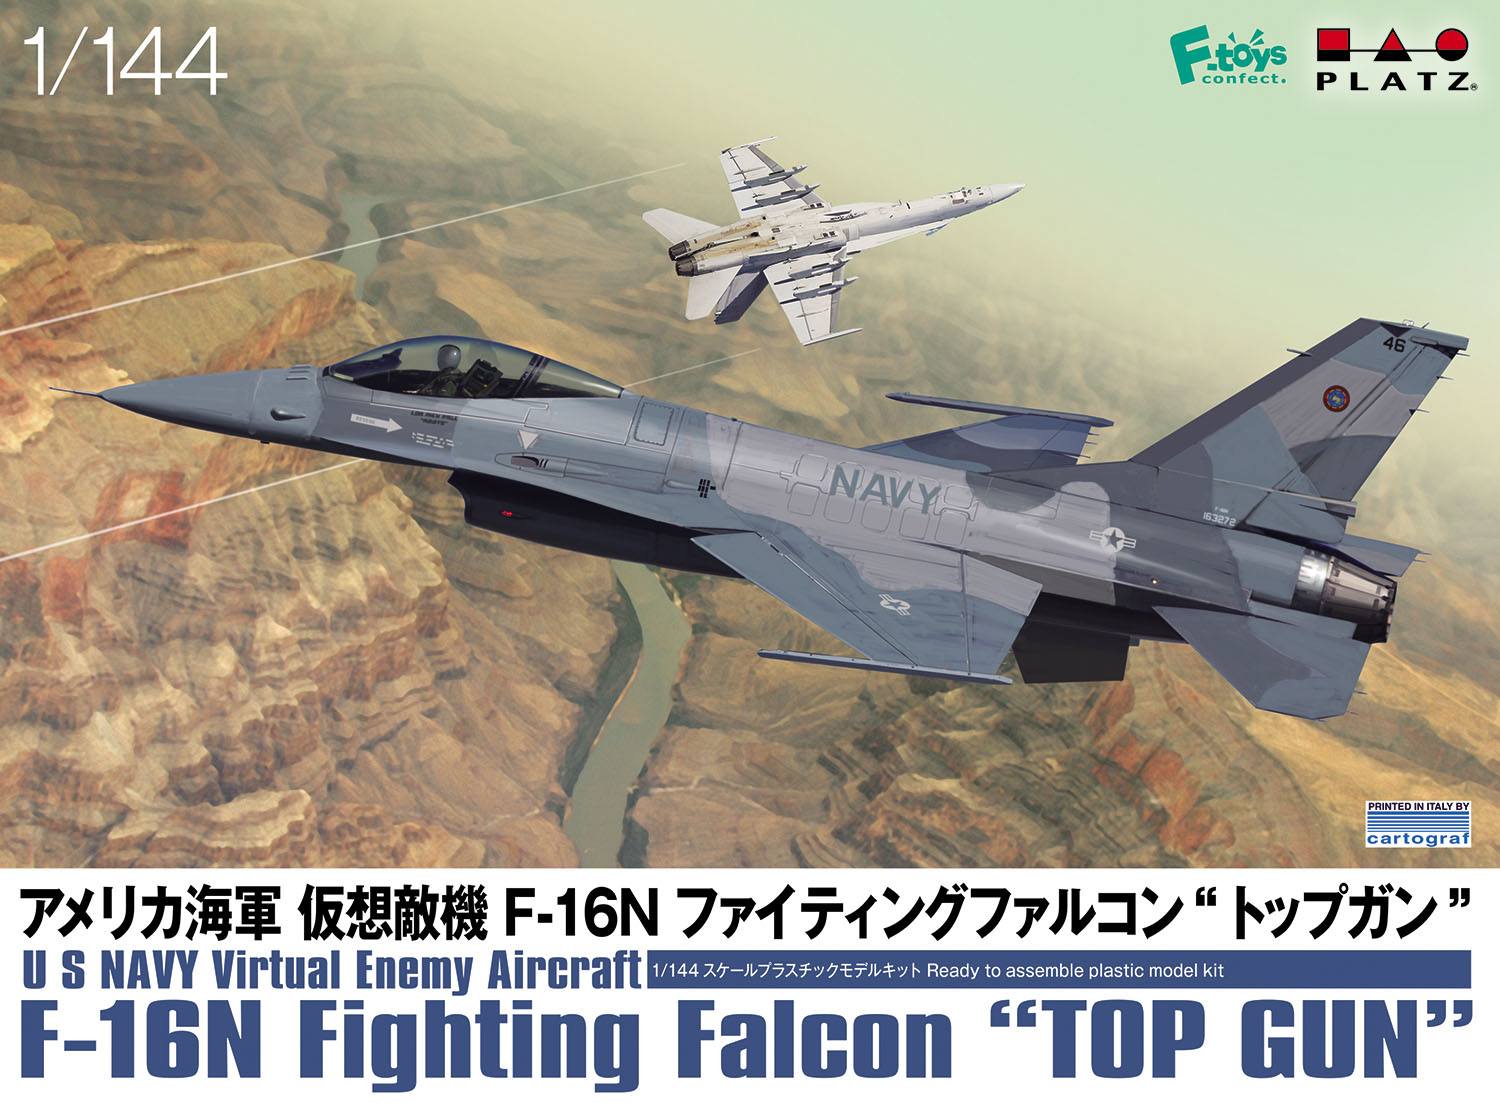 1/144 U.S. Navy Virtual Enemy F-16N Fighting Falcon "TOP GUN"